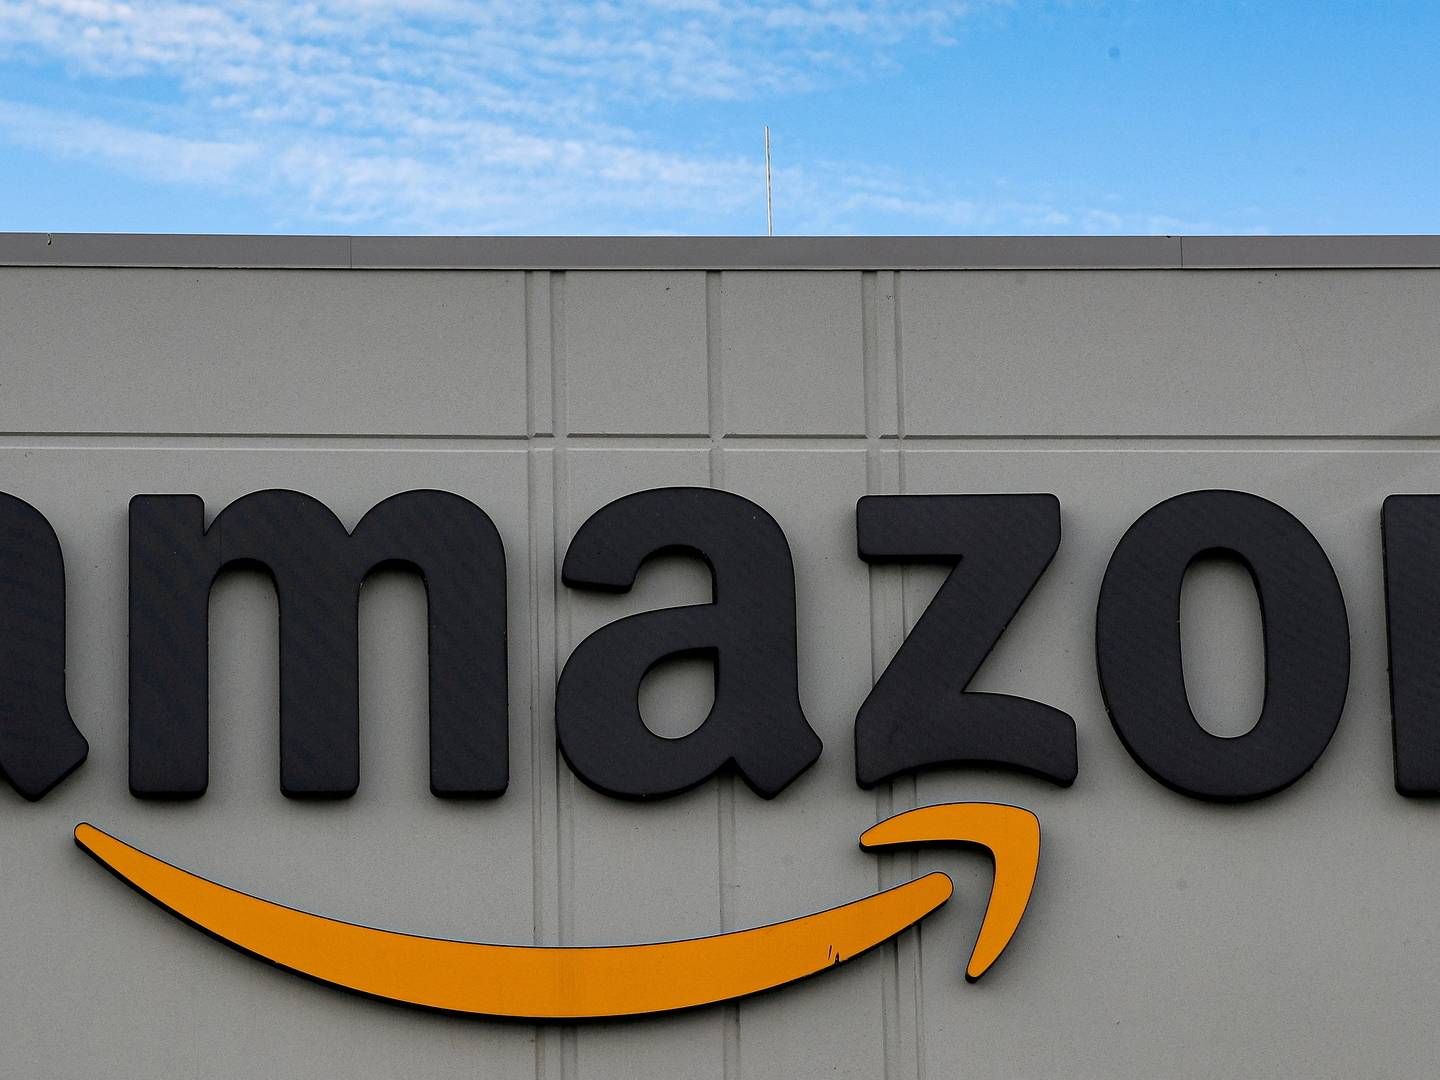 Amazon pønser på opkøb i markedet. | Foto: BRENDAN MCDERMID/REUTERS / X90143